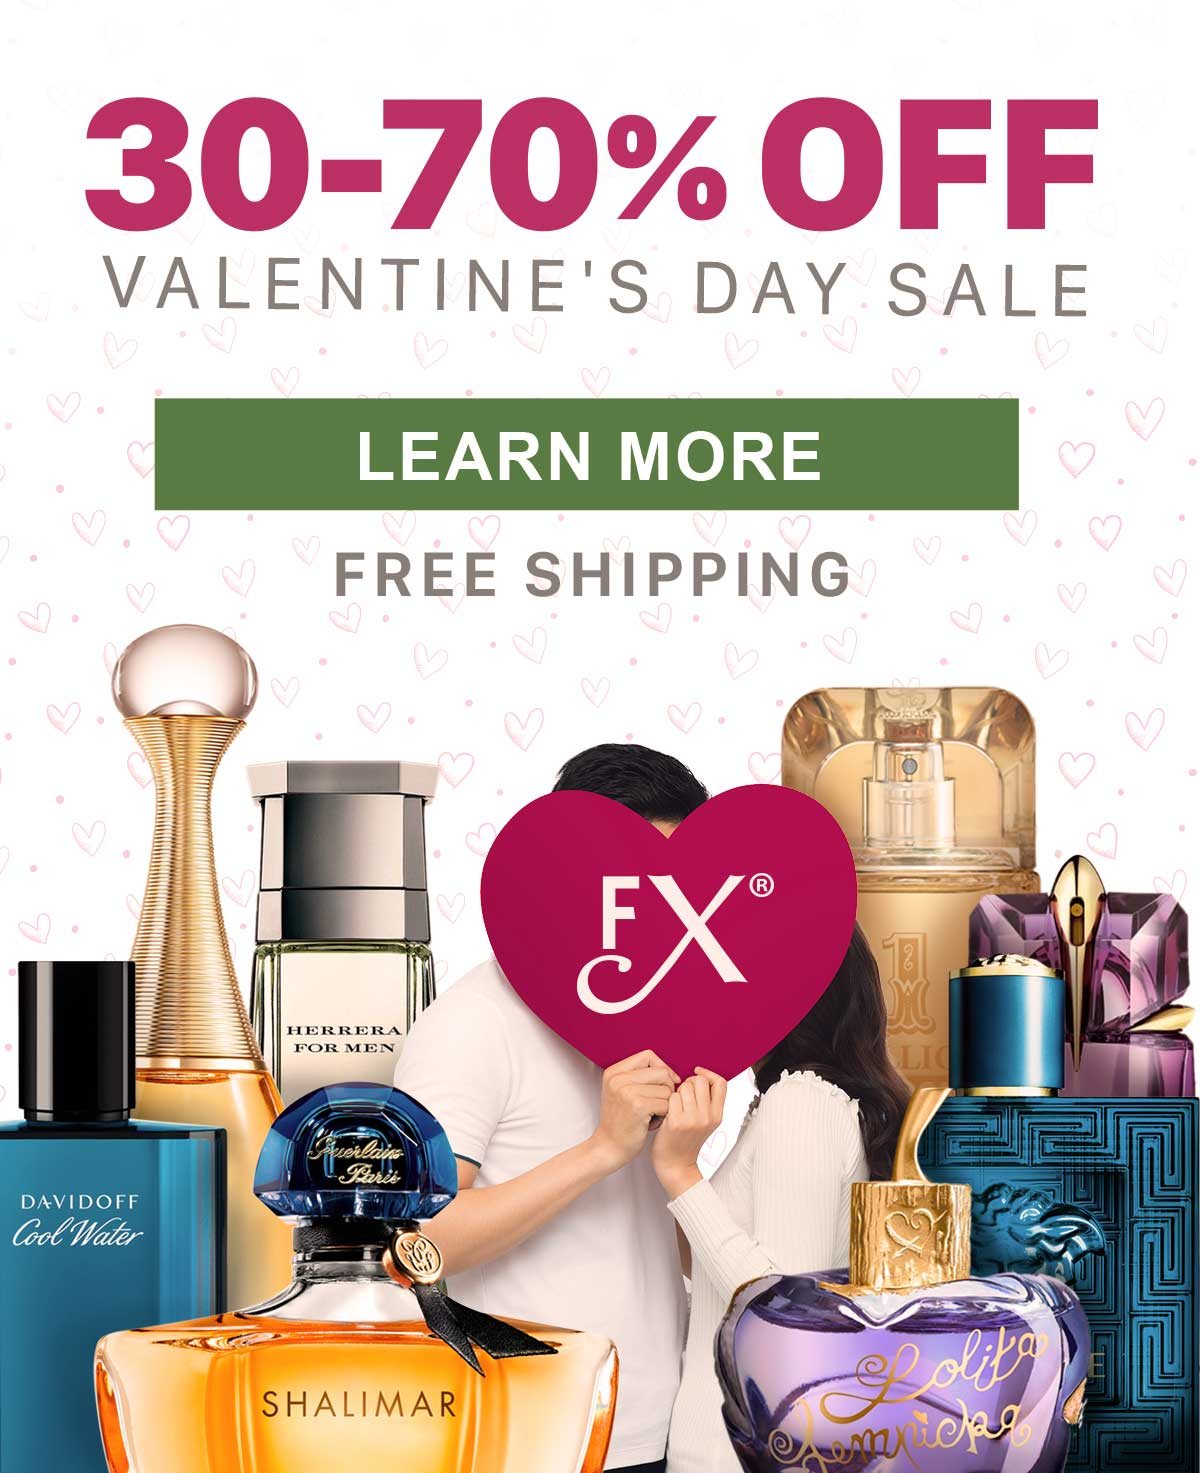 Valentine's Day Sale - 30-70 % off